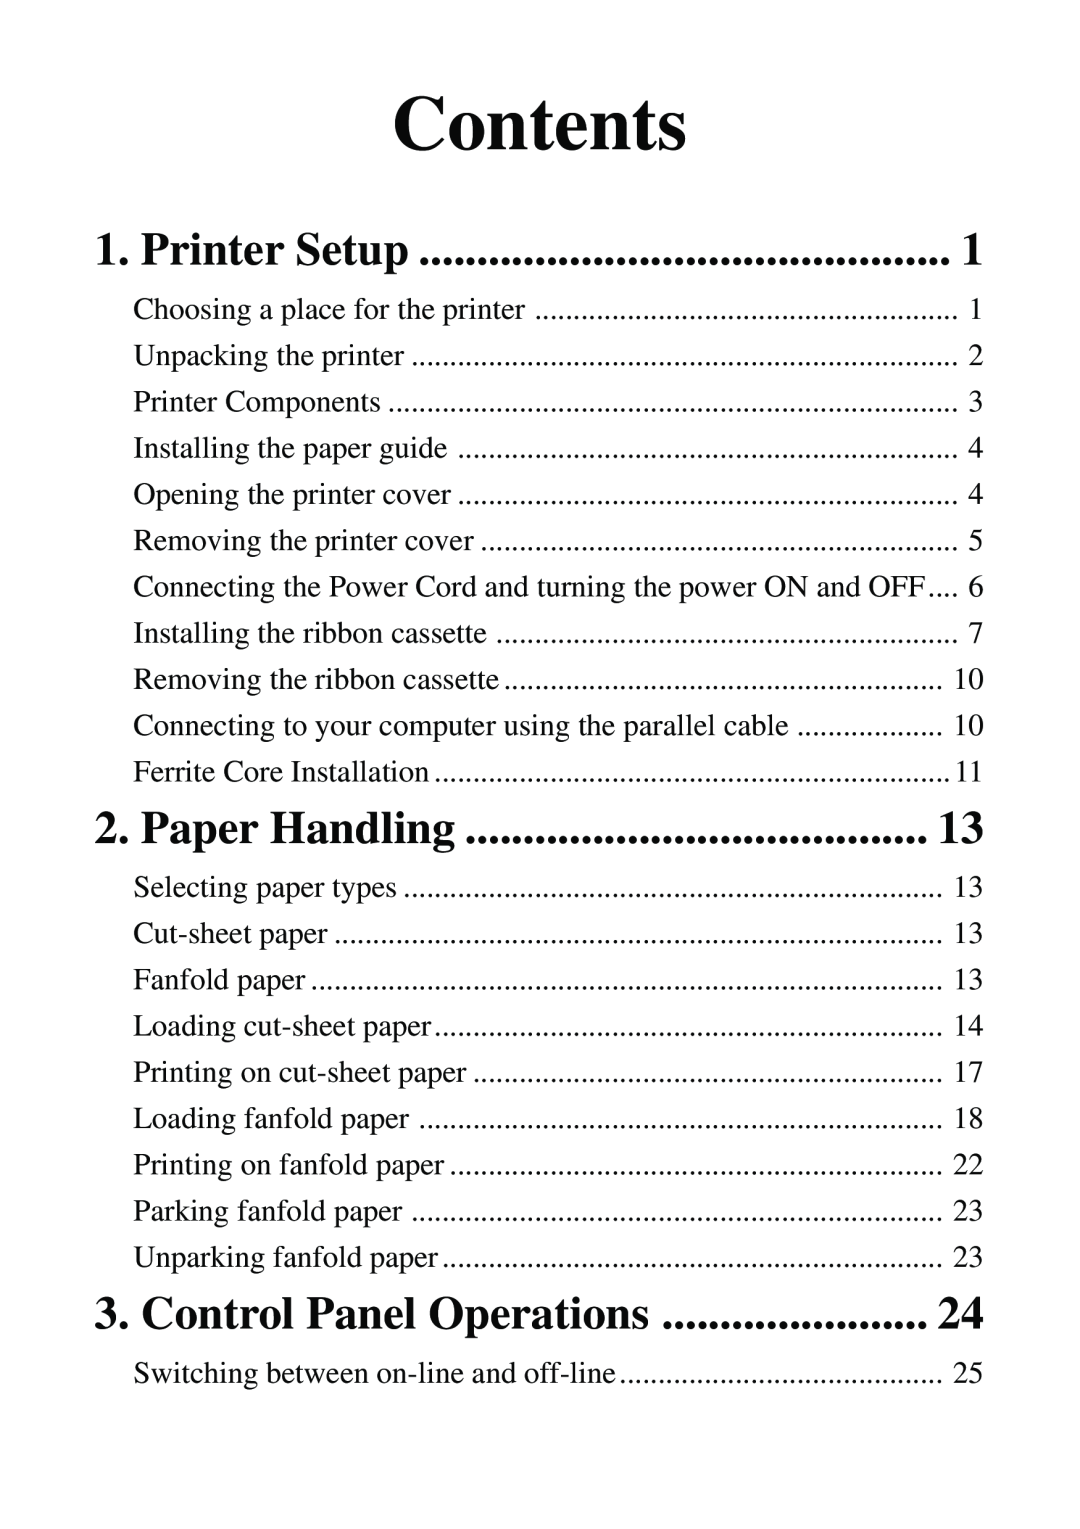 Star Micronics LC-500 user manual Paper Handling, Control Panel Operations, Contents, Printer Setup 